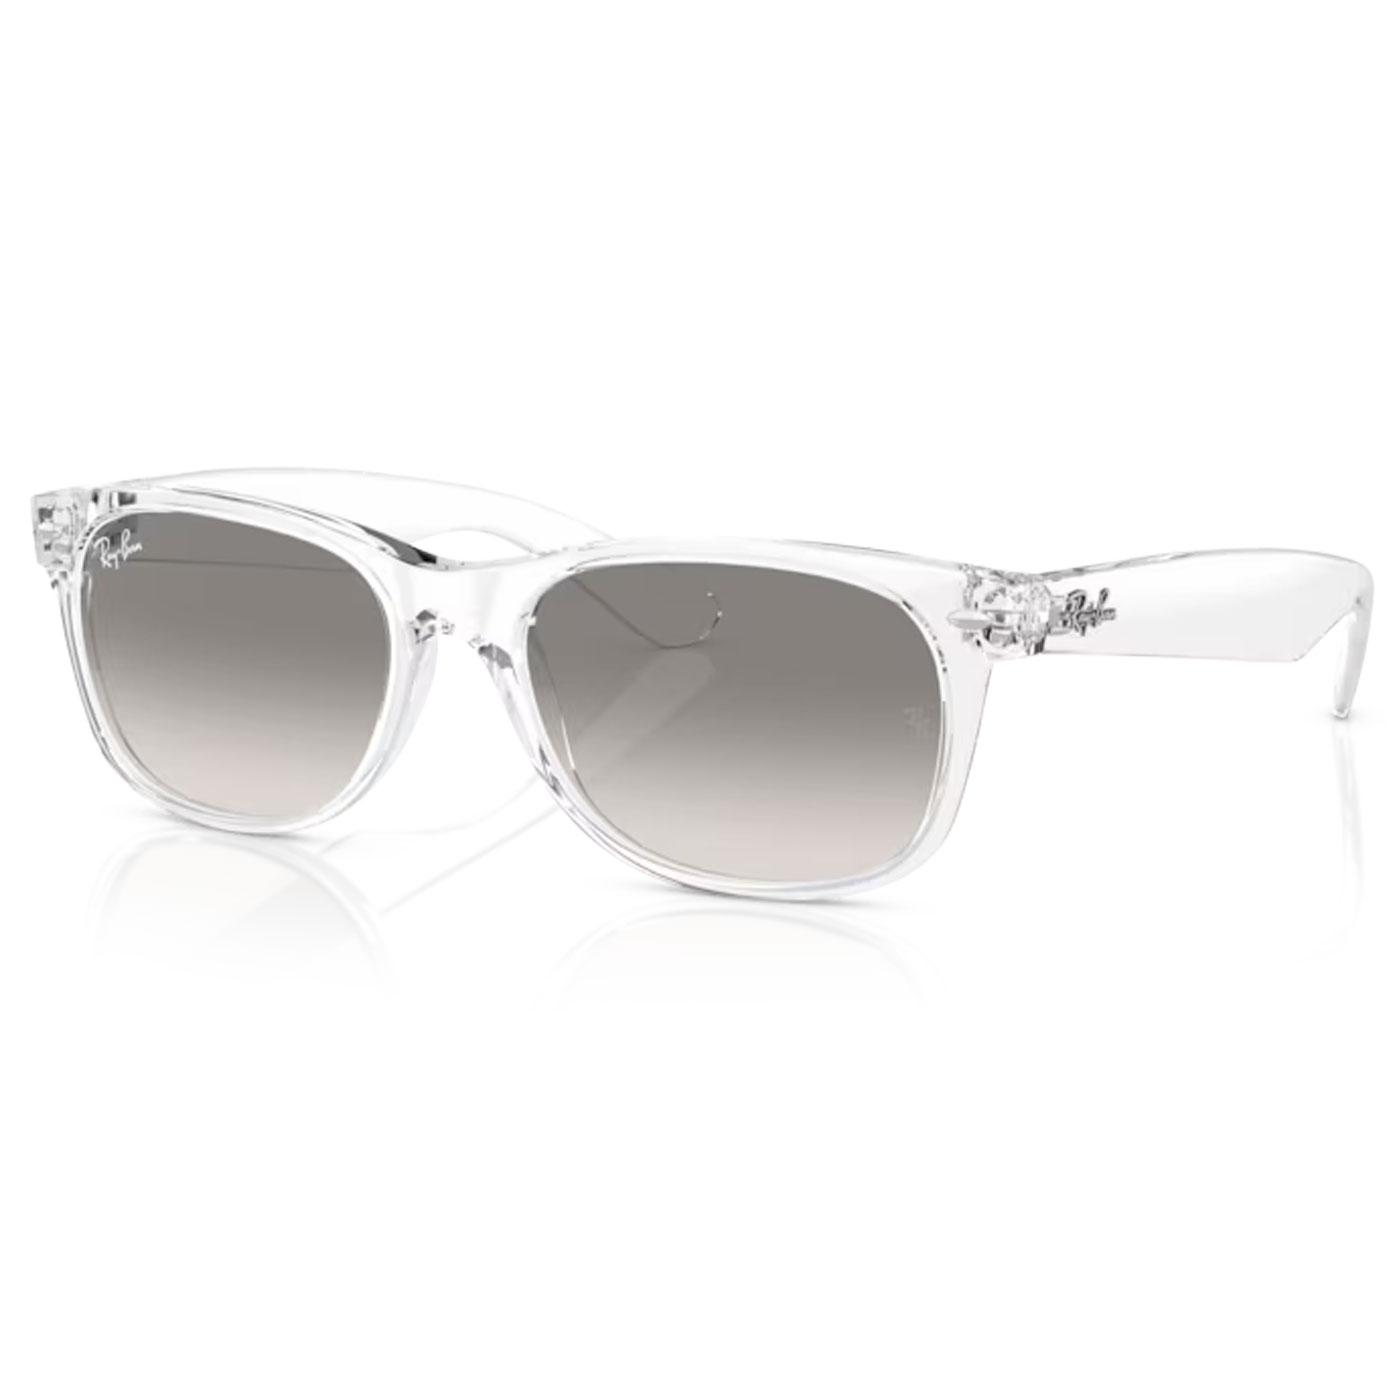 New Wayfarer Ray-Ban Retro 60s Clear Sunglasses   